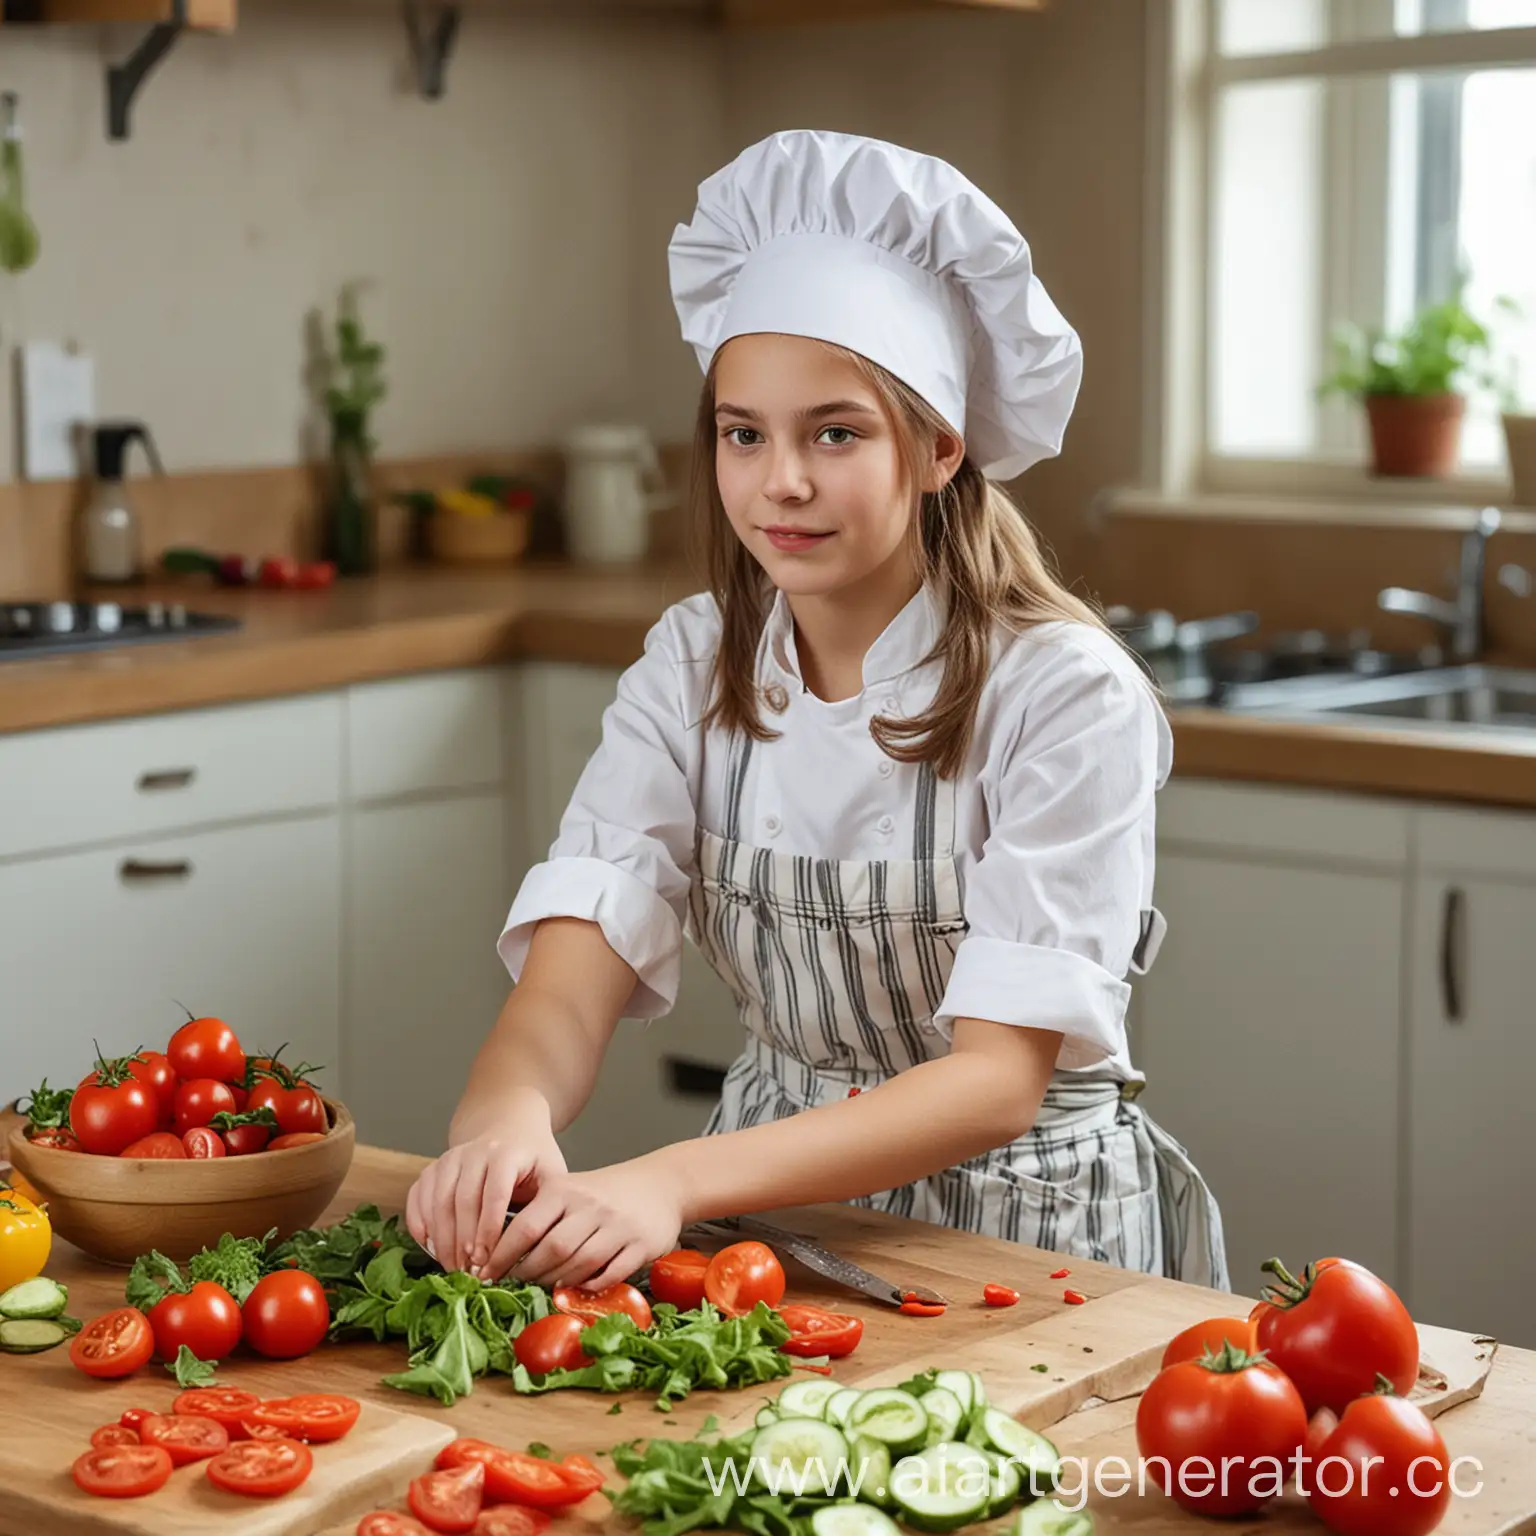 Teenage-Chef-Preparing-Fresh-Salad-at-Kitchen-Table